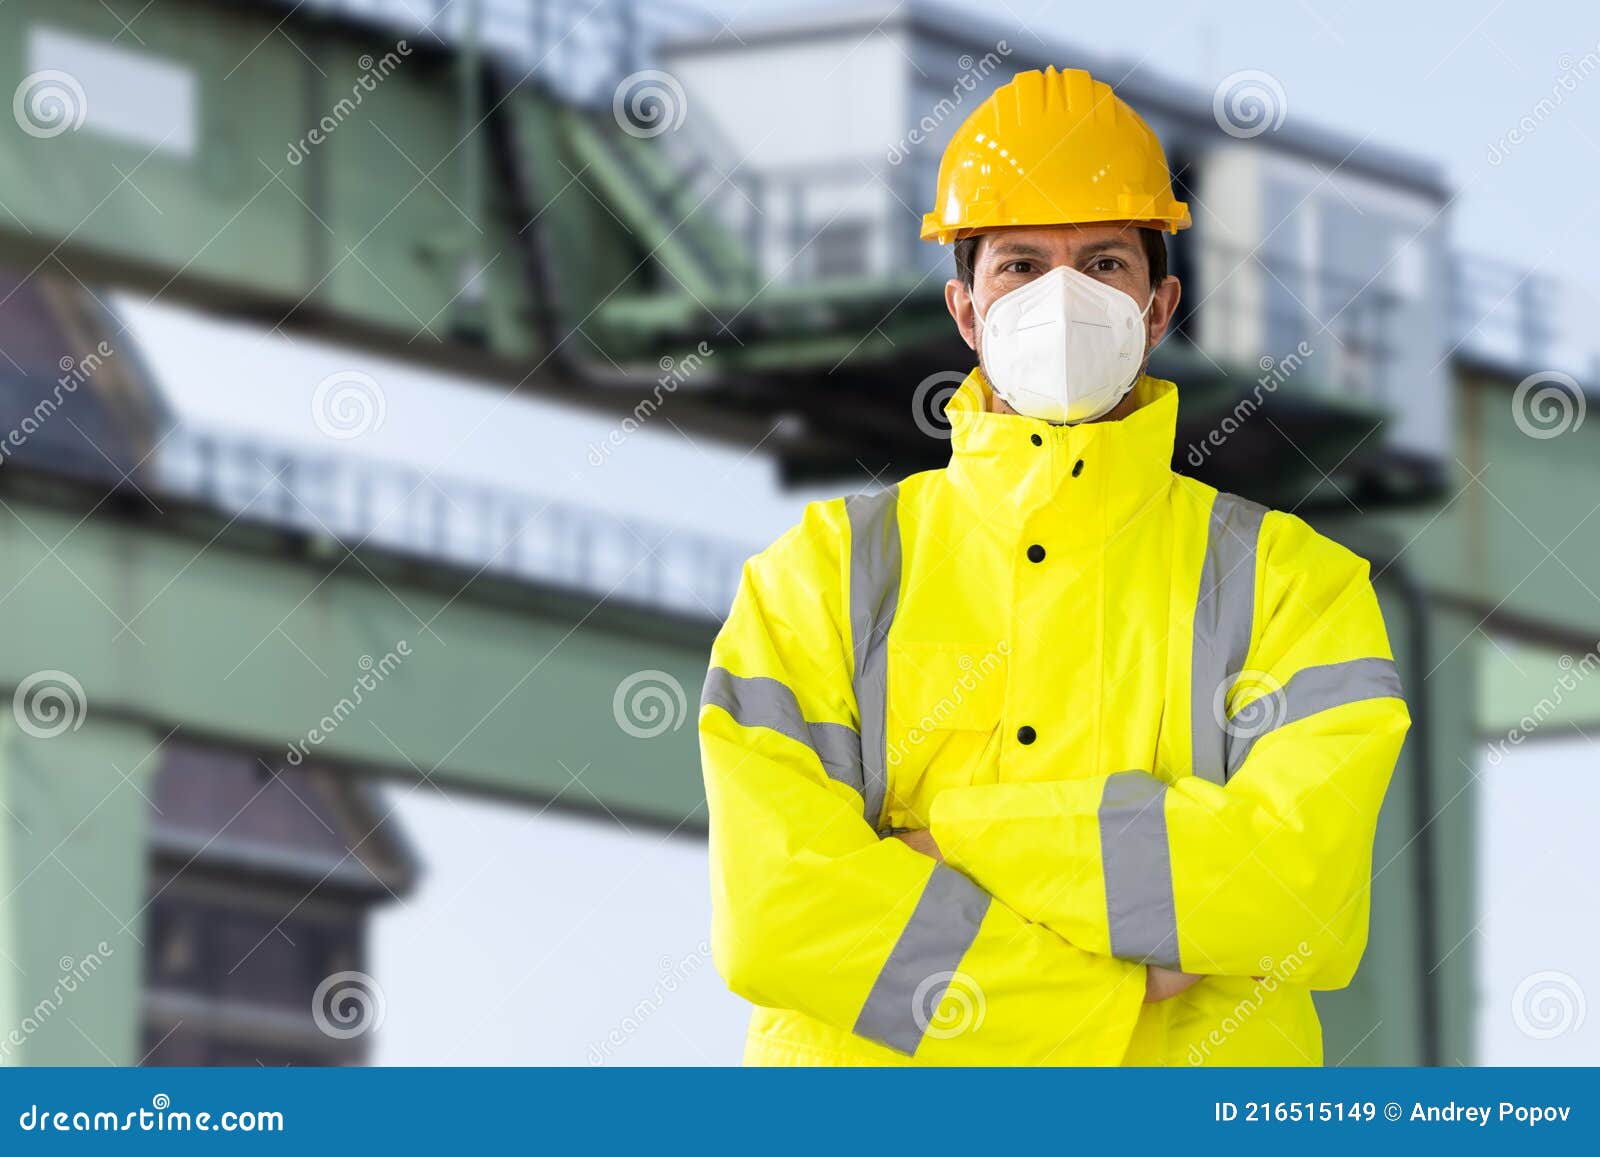 industrial engineer wearing ffp2 face mask